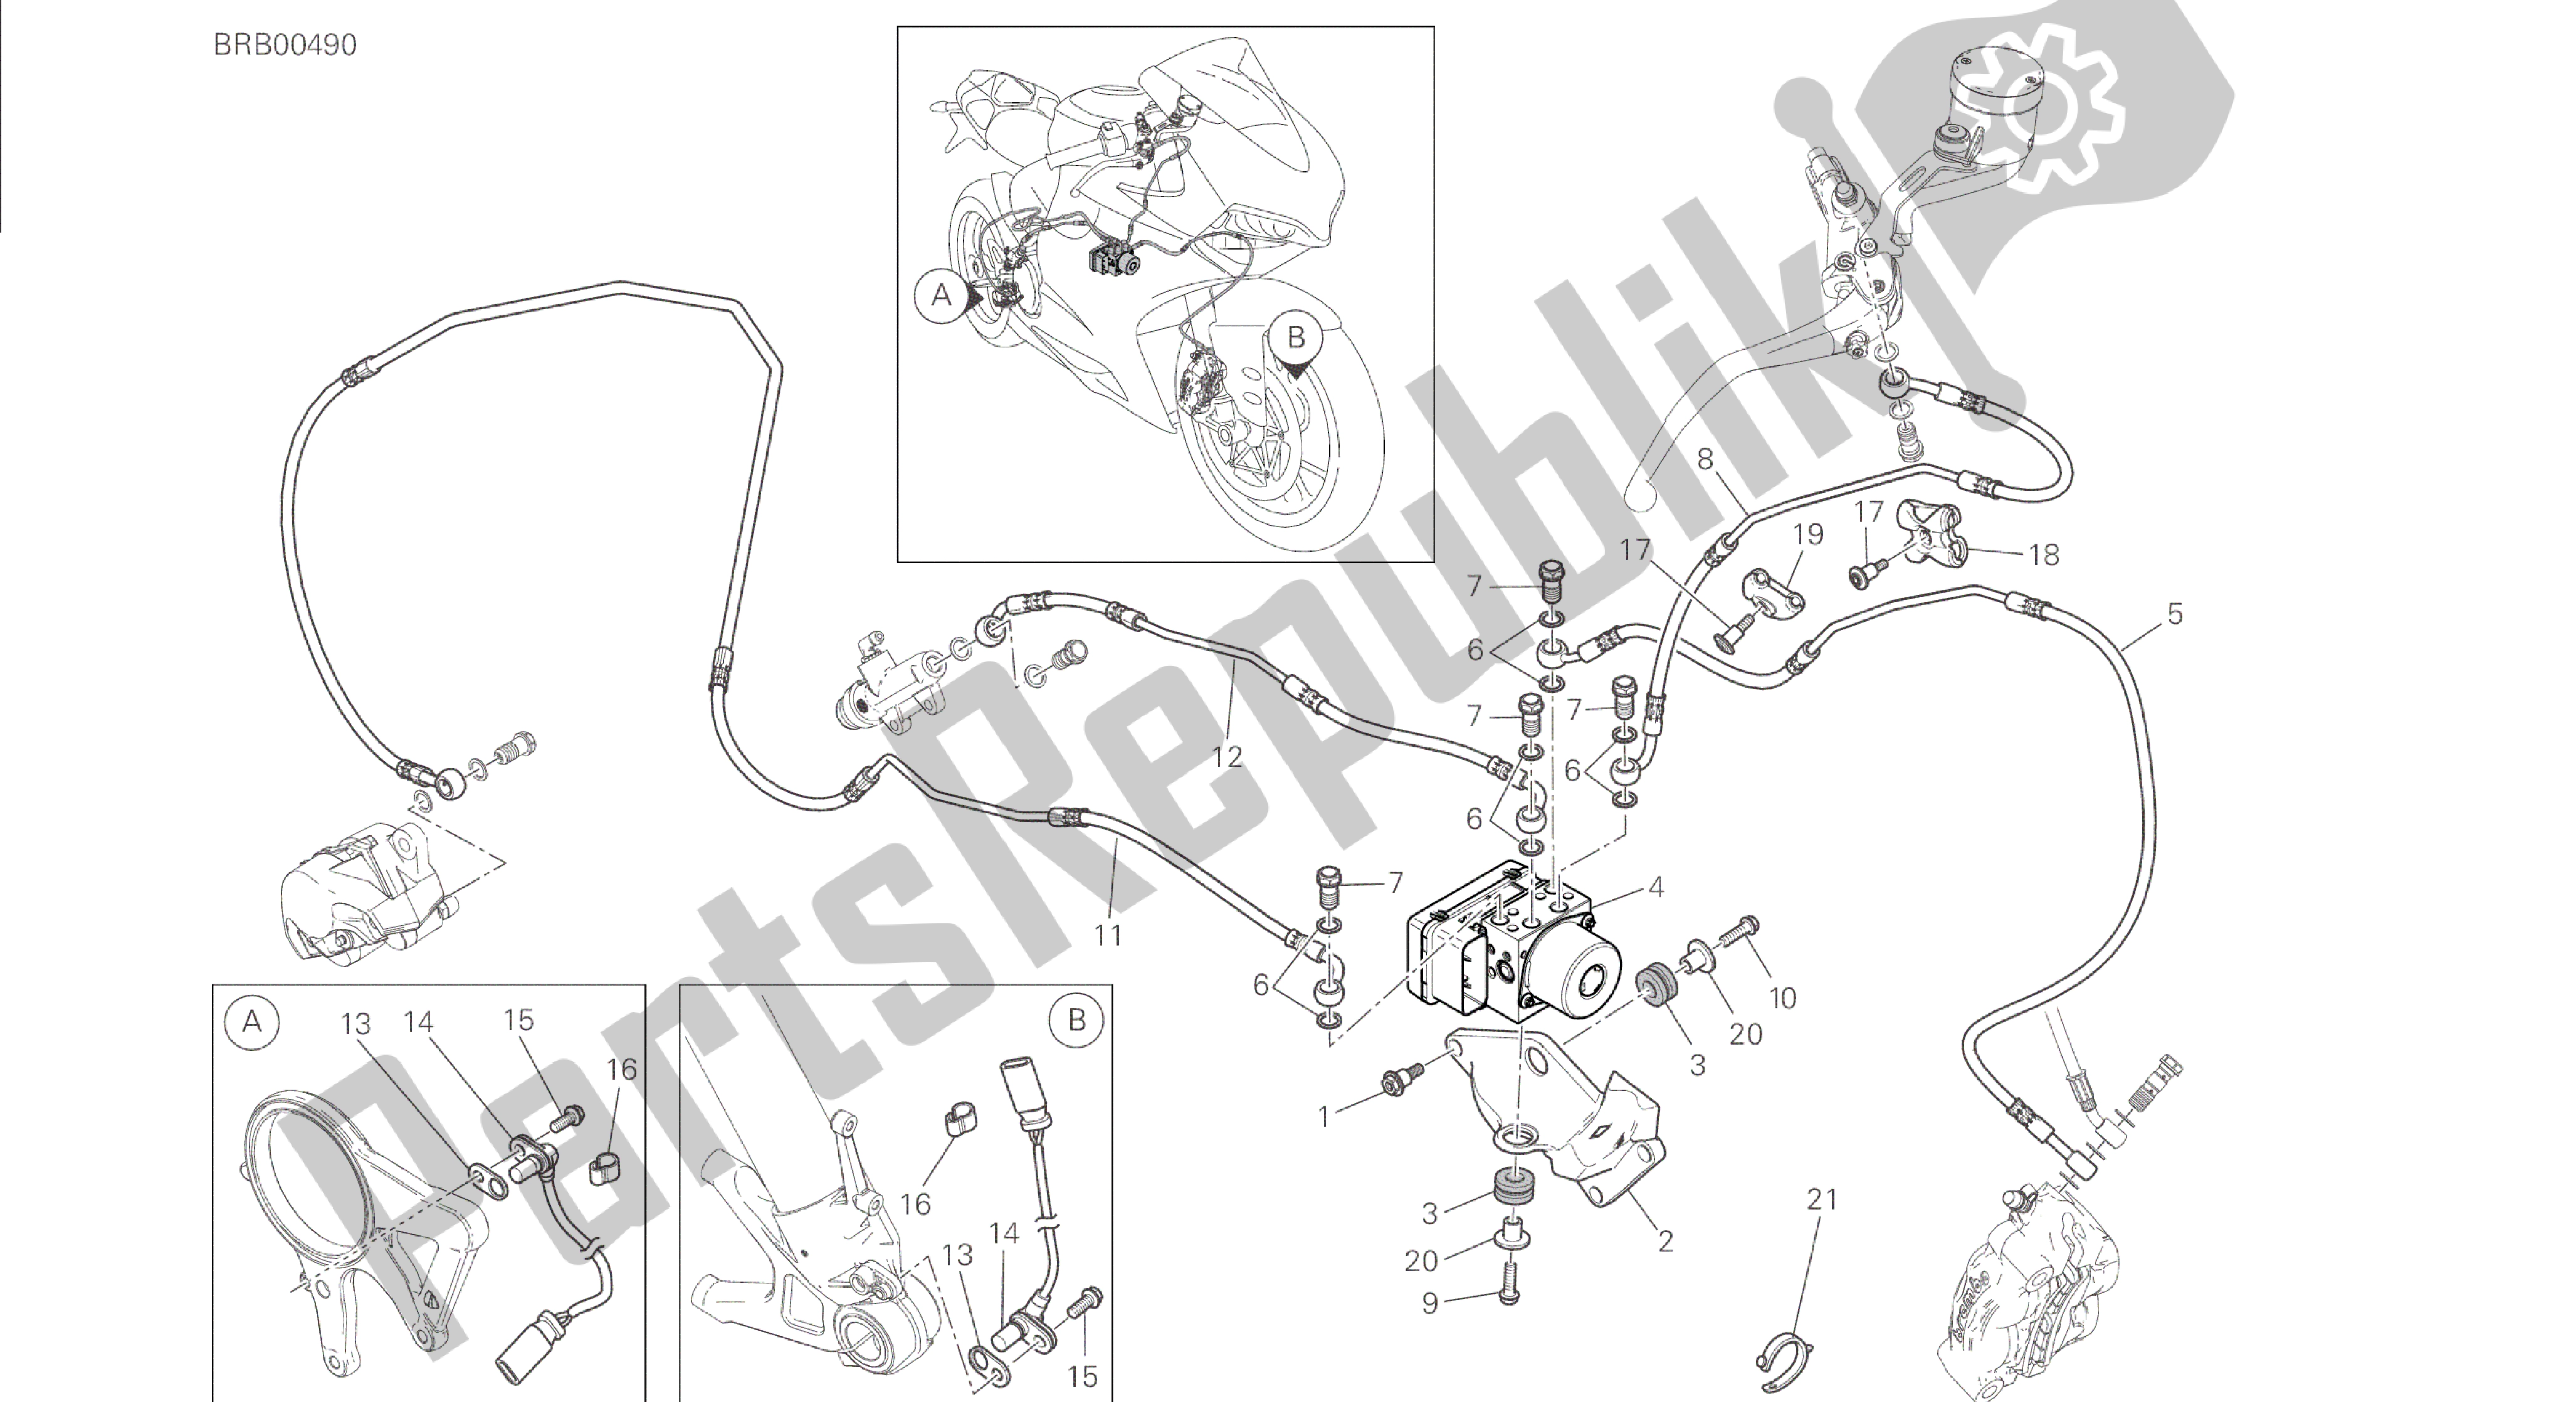 Todas las partes para Dibujo 24a - Sistema De Frenos Antibloqueo (abs) [mod: 1299; Xst: Marco De Grupo Aus, Eur, Fra, Jap, Twn] de Ducati Panigale 1299 2015